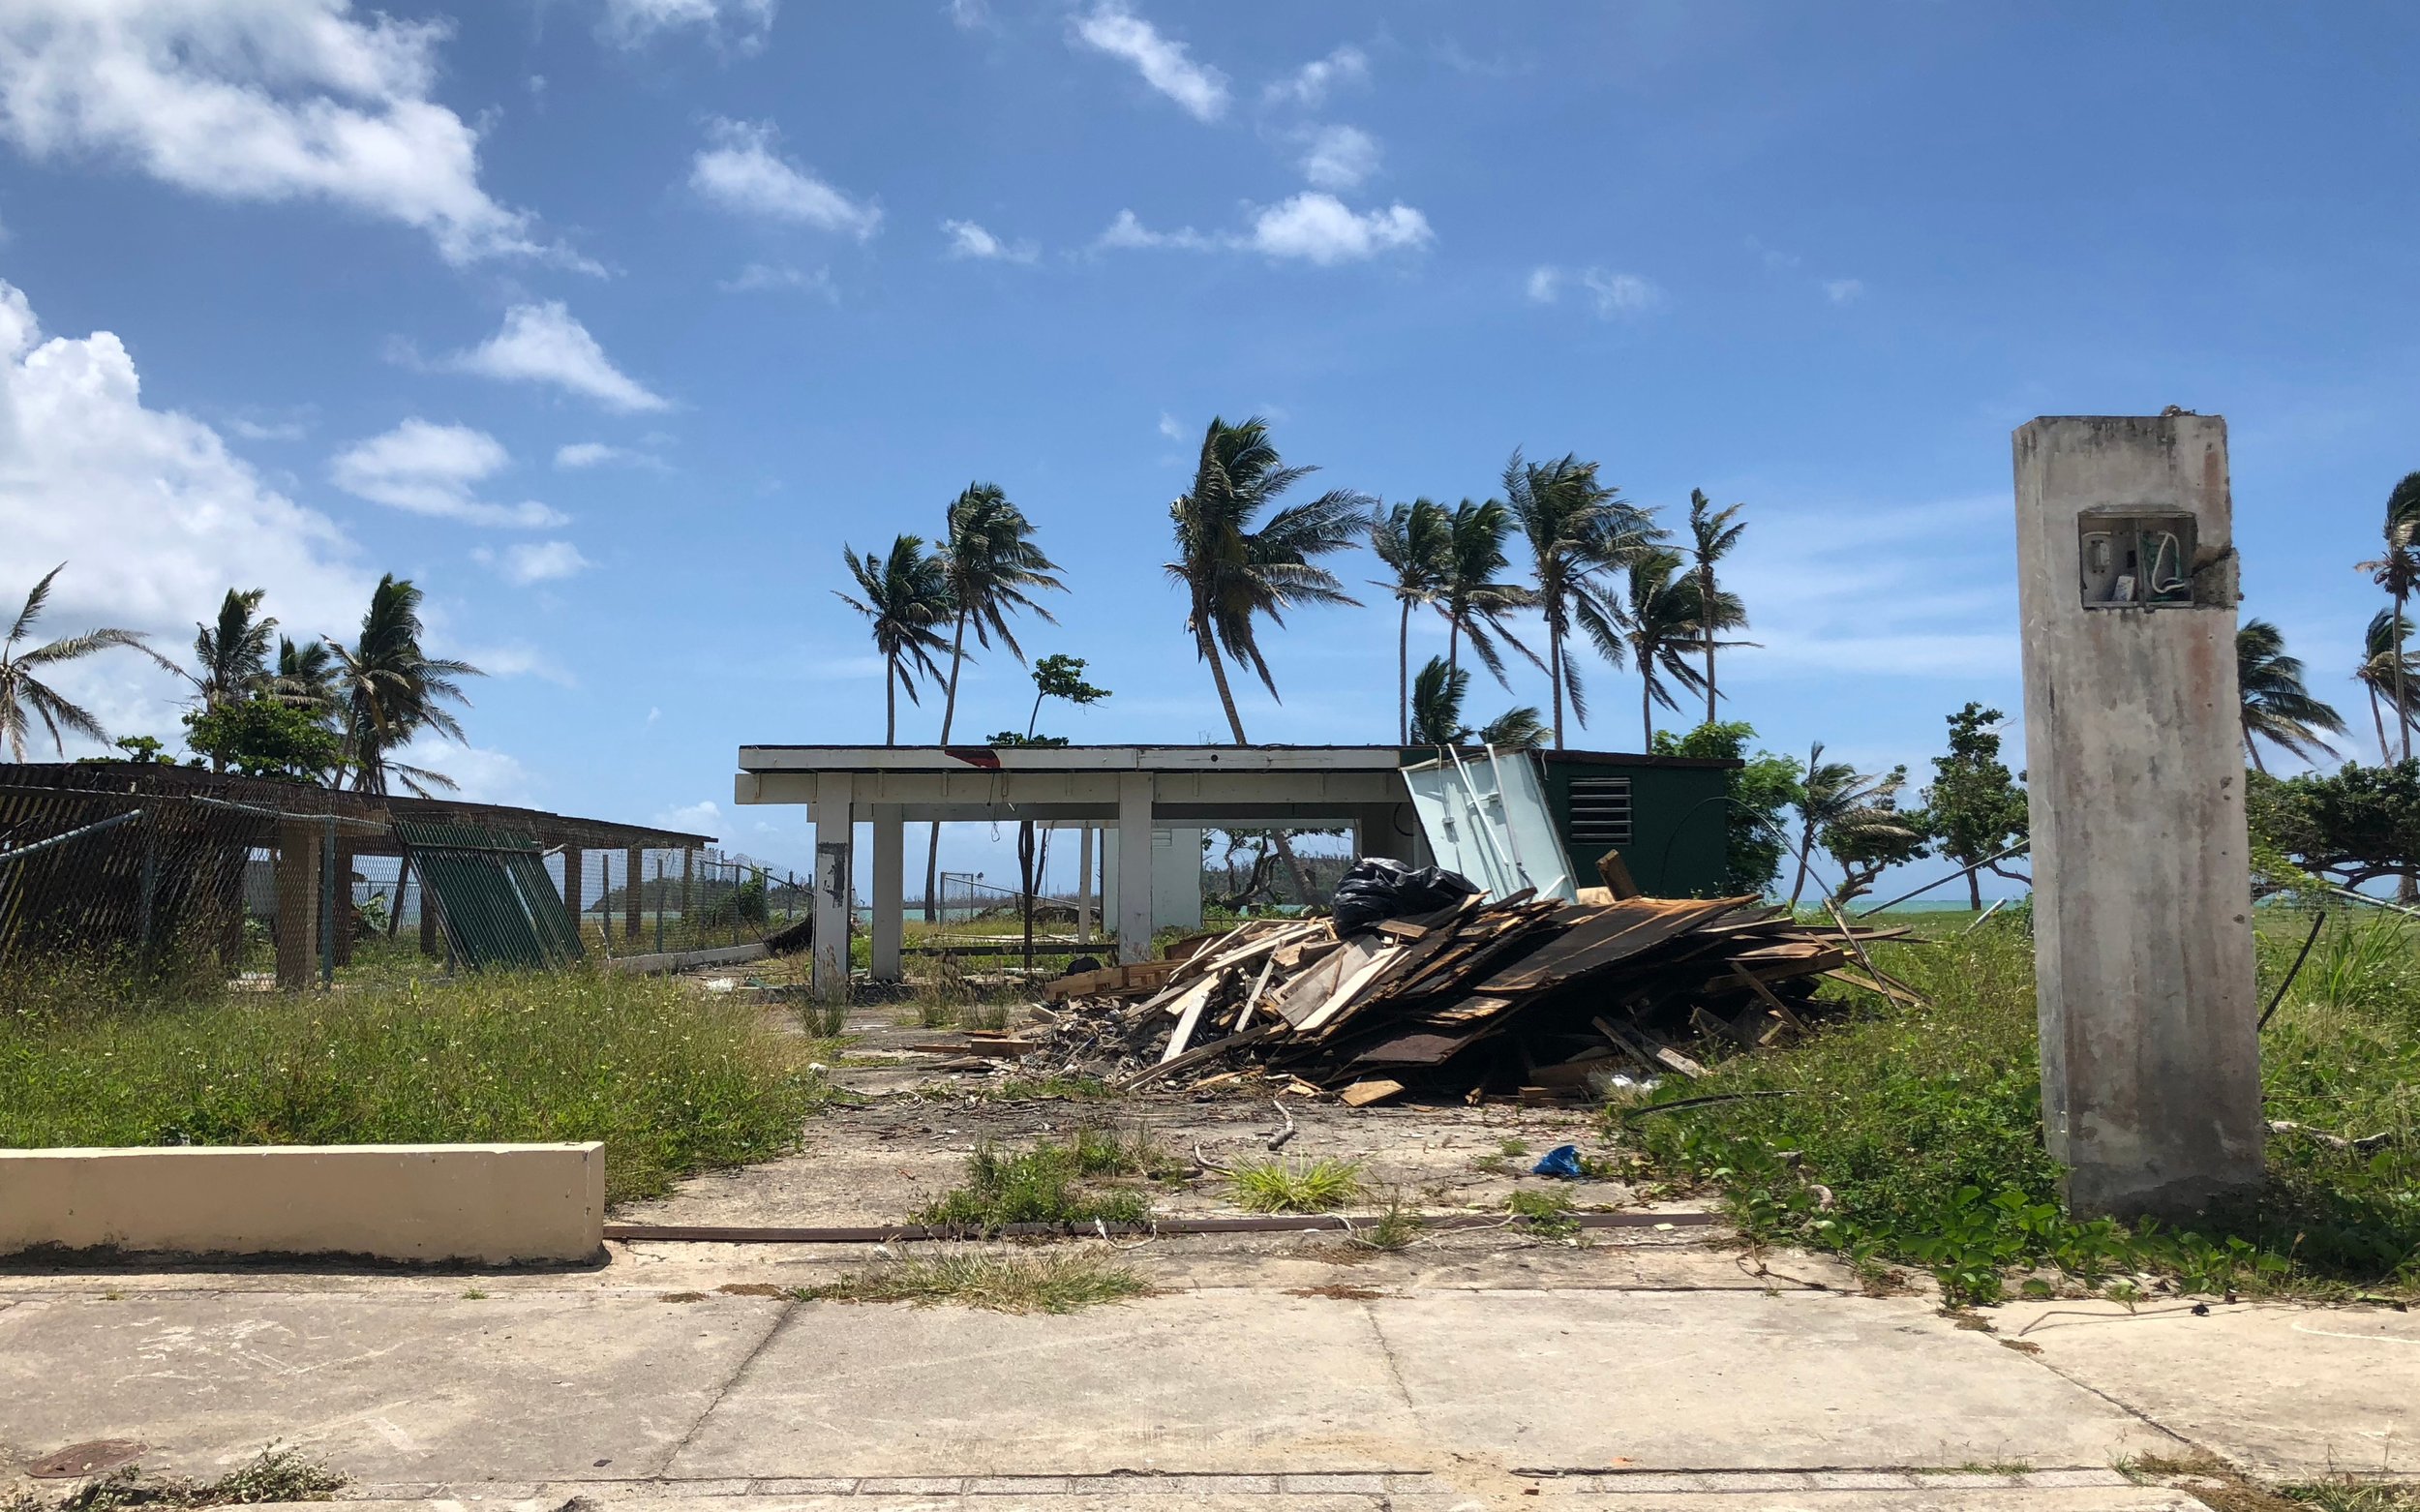  Damage from Hurricane Maria, Punta Santiago, Humacao, Puerto Rico May, 2018 